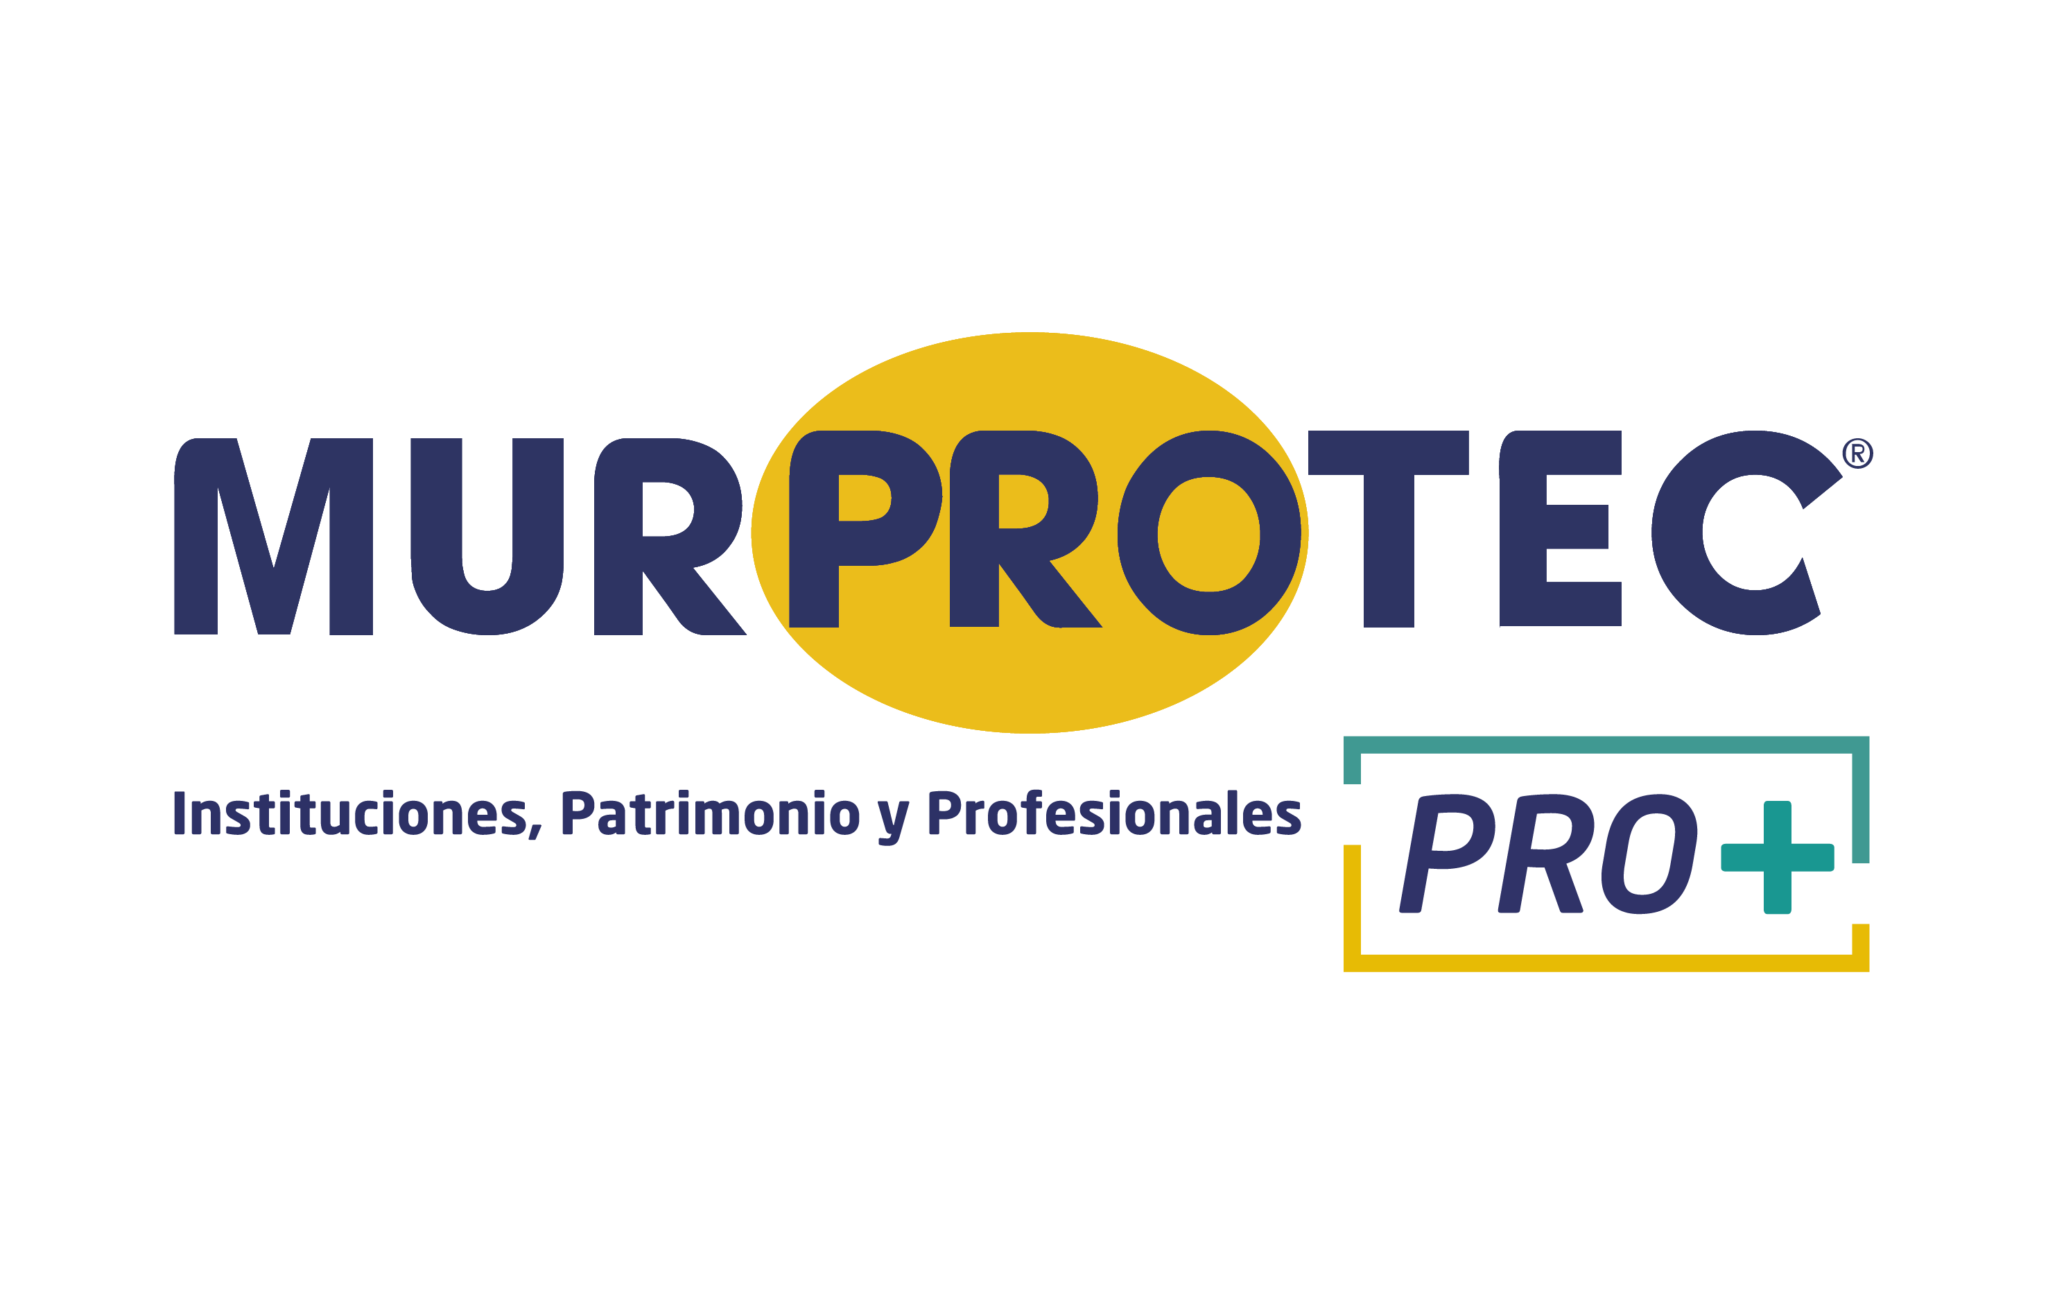 murprotec-proplus